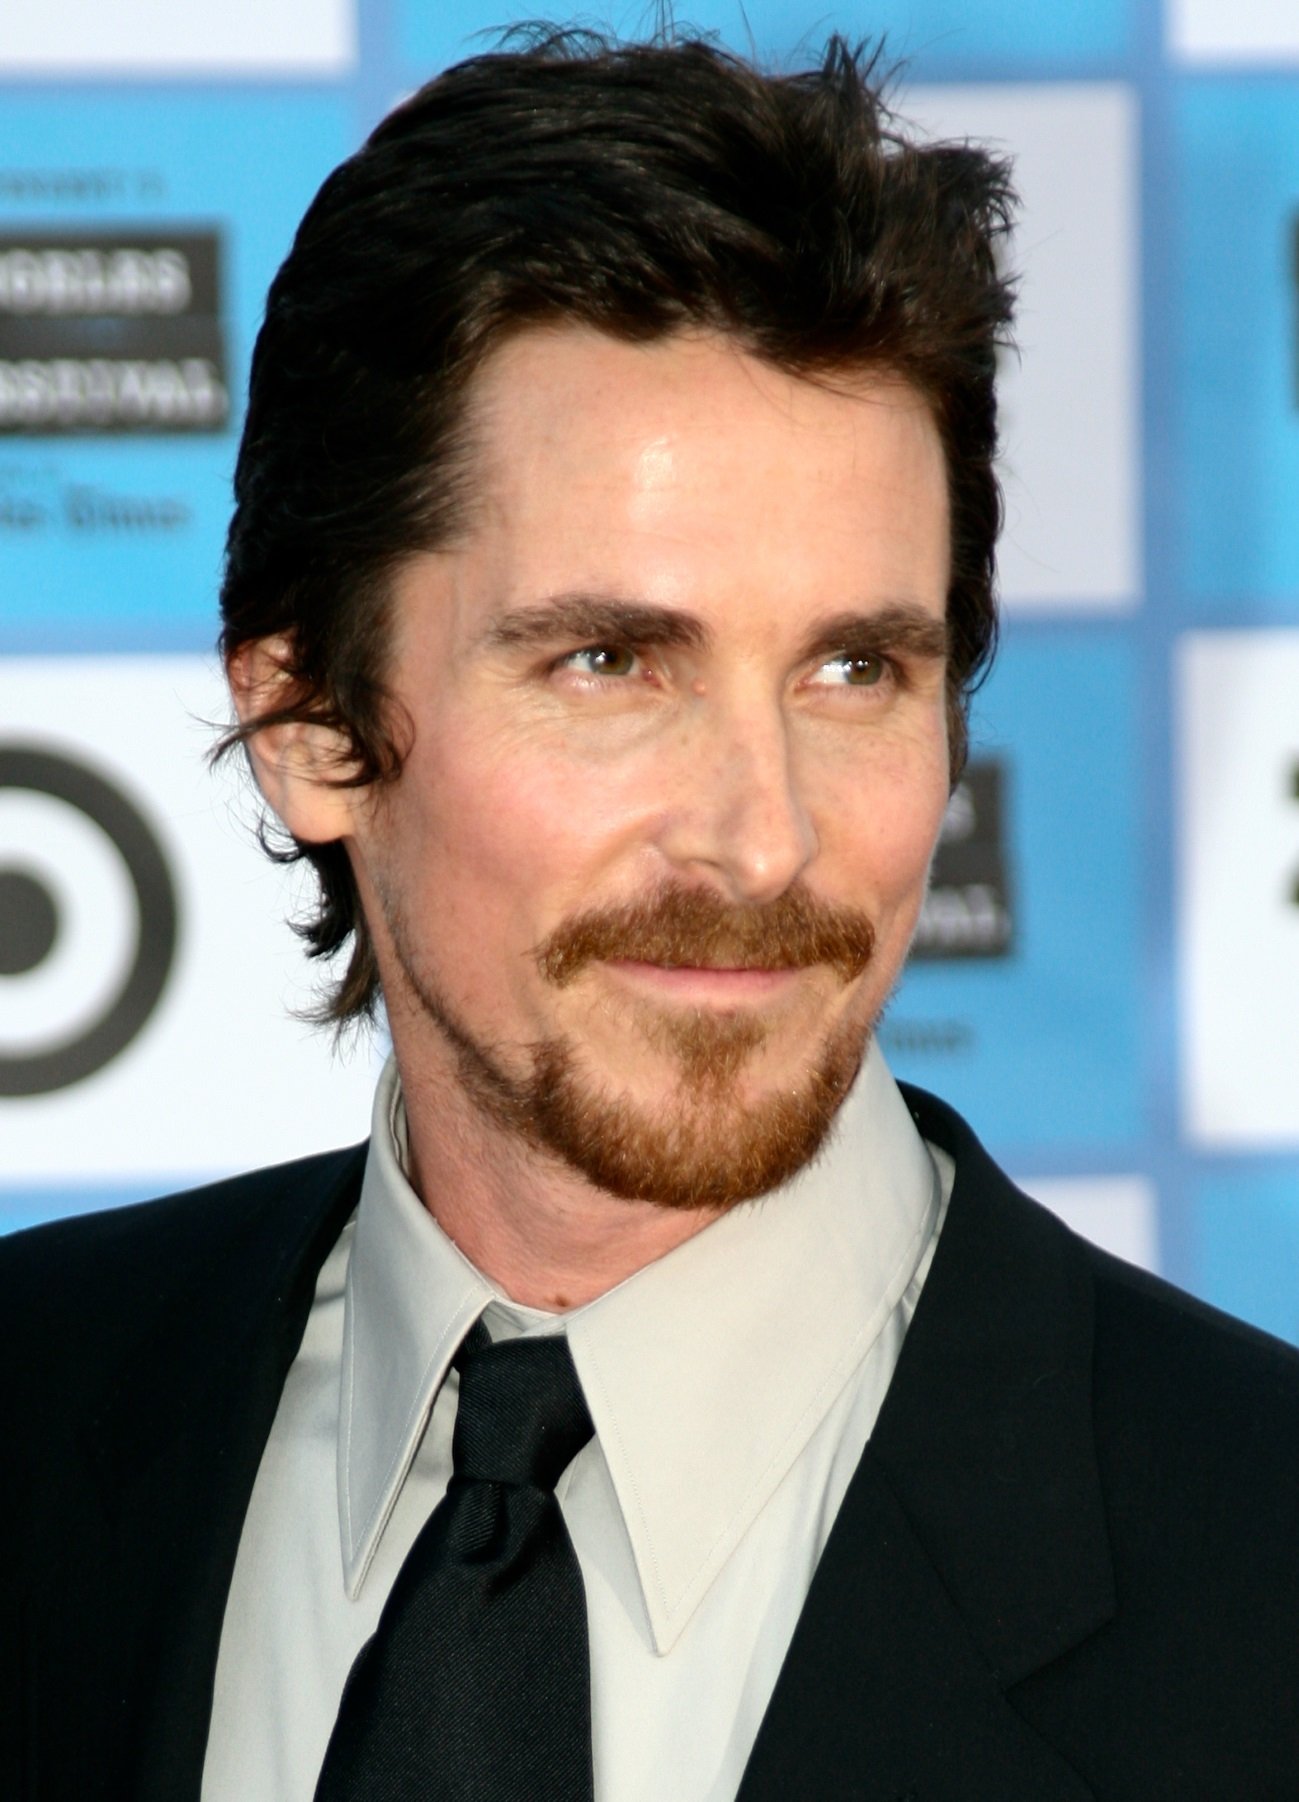 El actor Christian Bale, prácticamente irreconocible